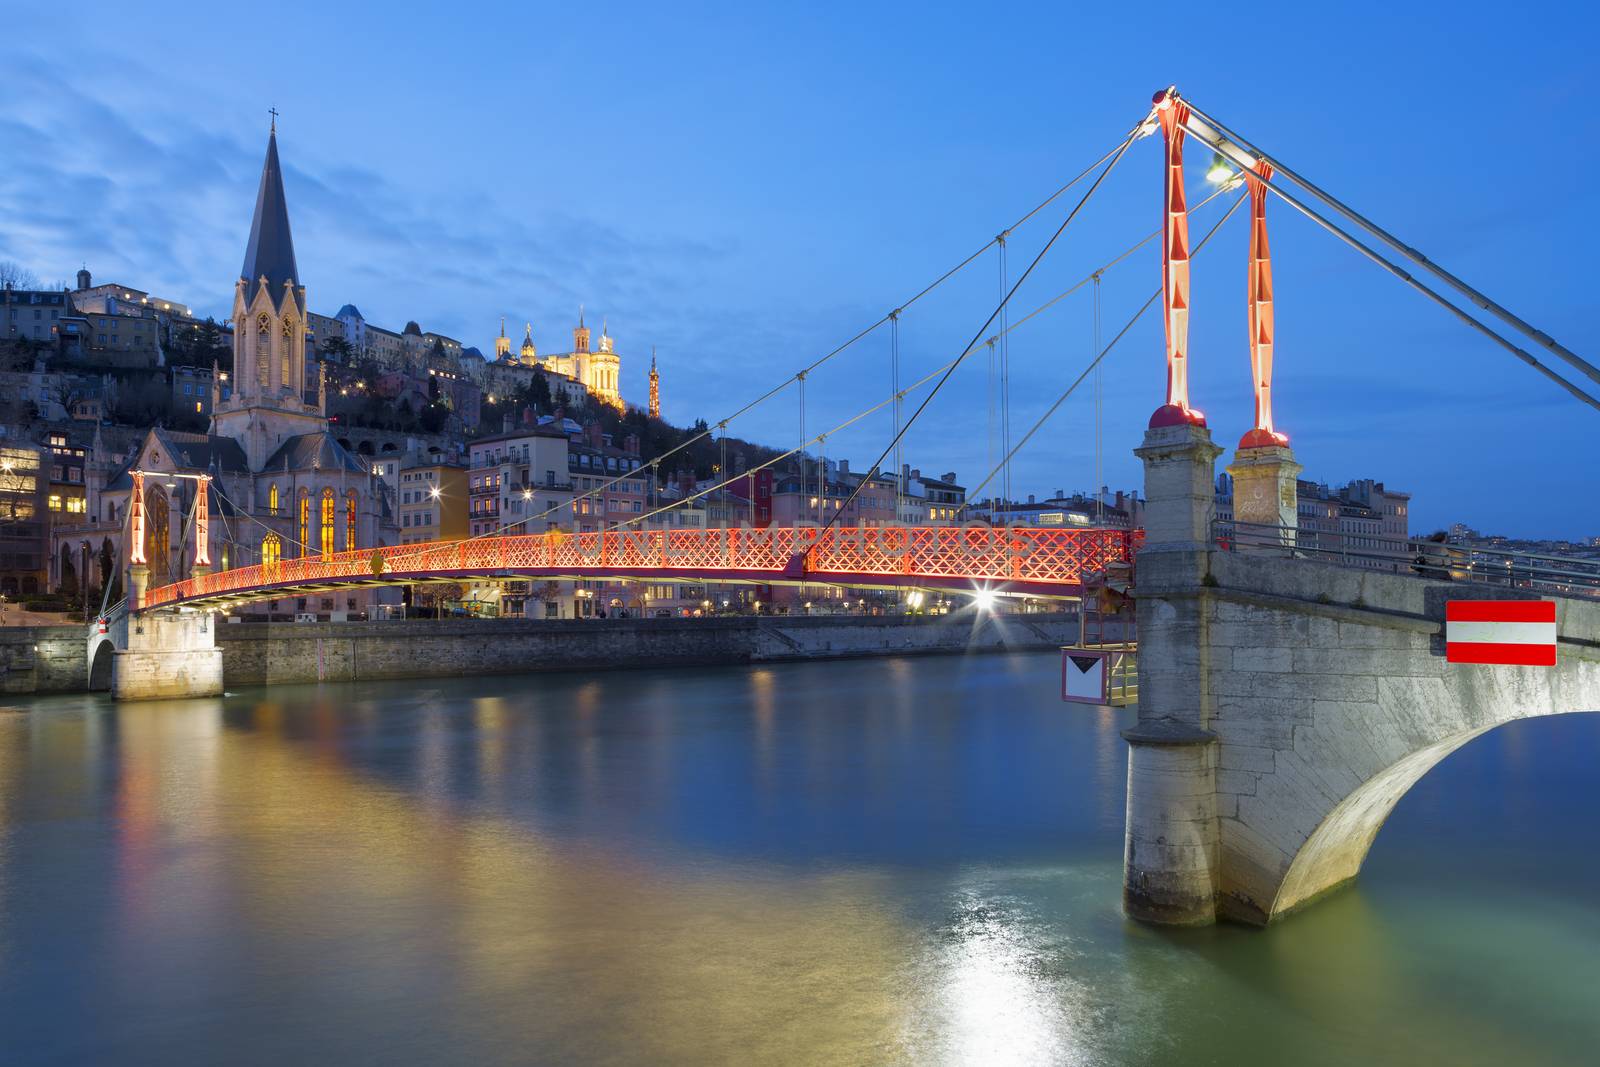 Lyon with Saone river and footbridge at night by vwalakte